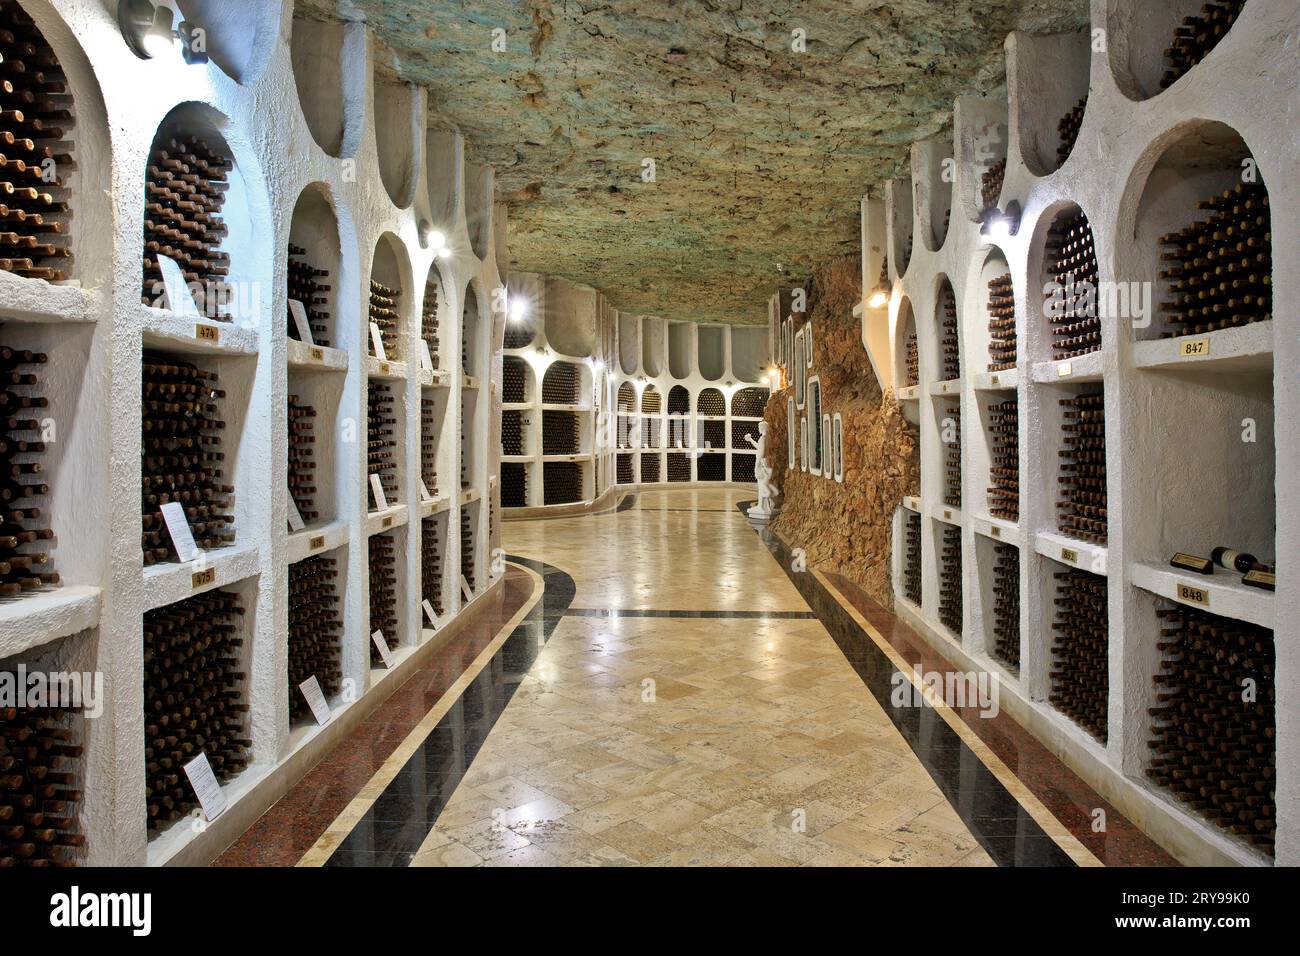 Stored wine bottles at the ancient underground limestone galleries of the Cricova Winery in Cricova, Moldova Stock Photo